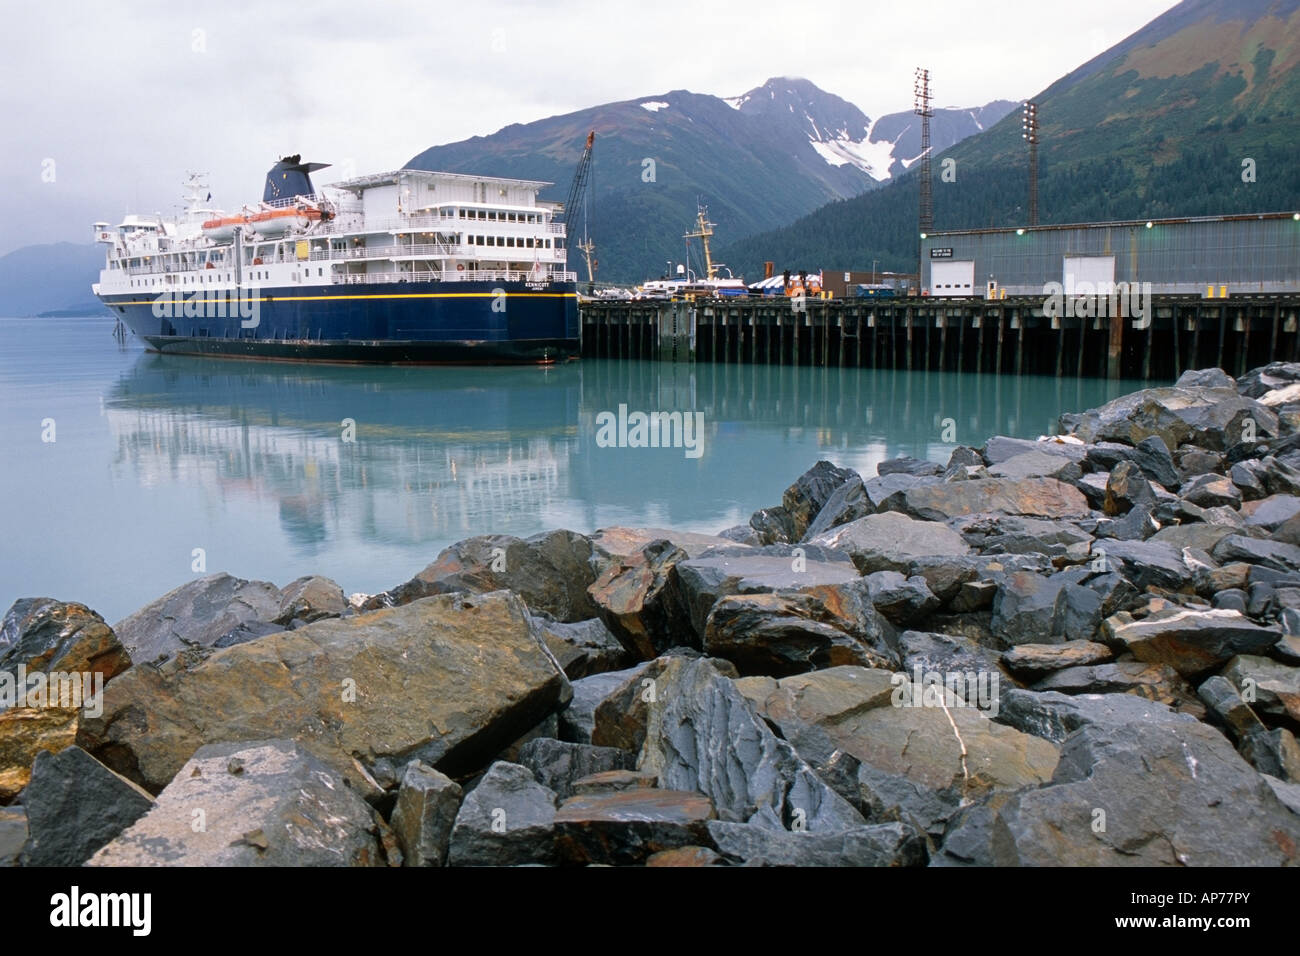 Alaska Marine Highway Ferry M/V Kennicott docked at the port of Seward. Summer on the Kenai Pennisula of Southcentral Alaska. Stock Photo